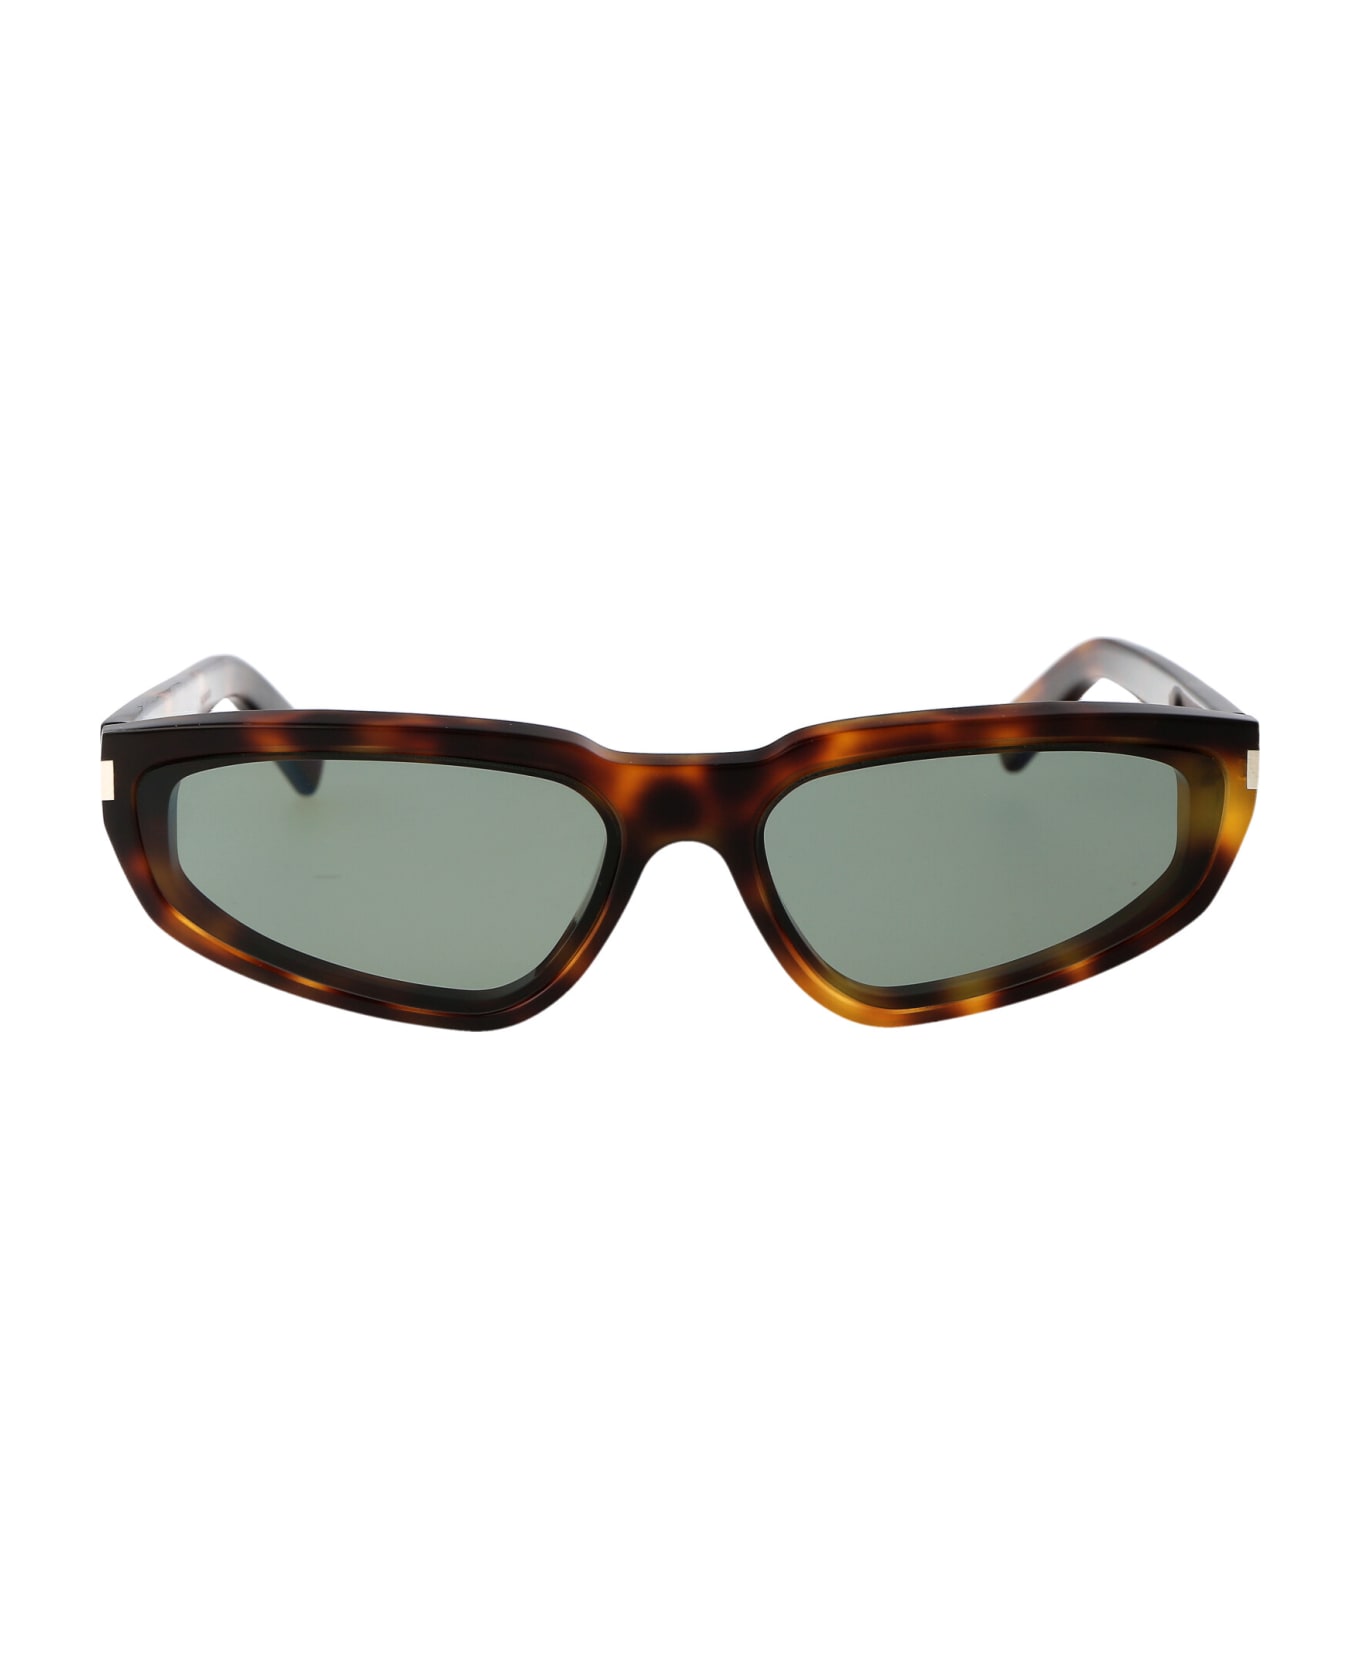 Saint Laurent Eyewear Sl 634 Nova Sunglasses - 003 HAVANA HAVANA GREEN